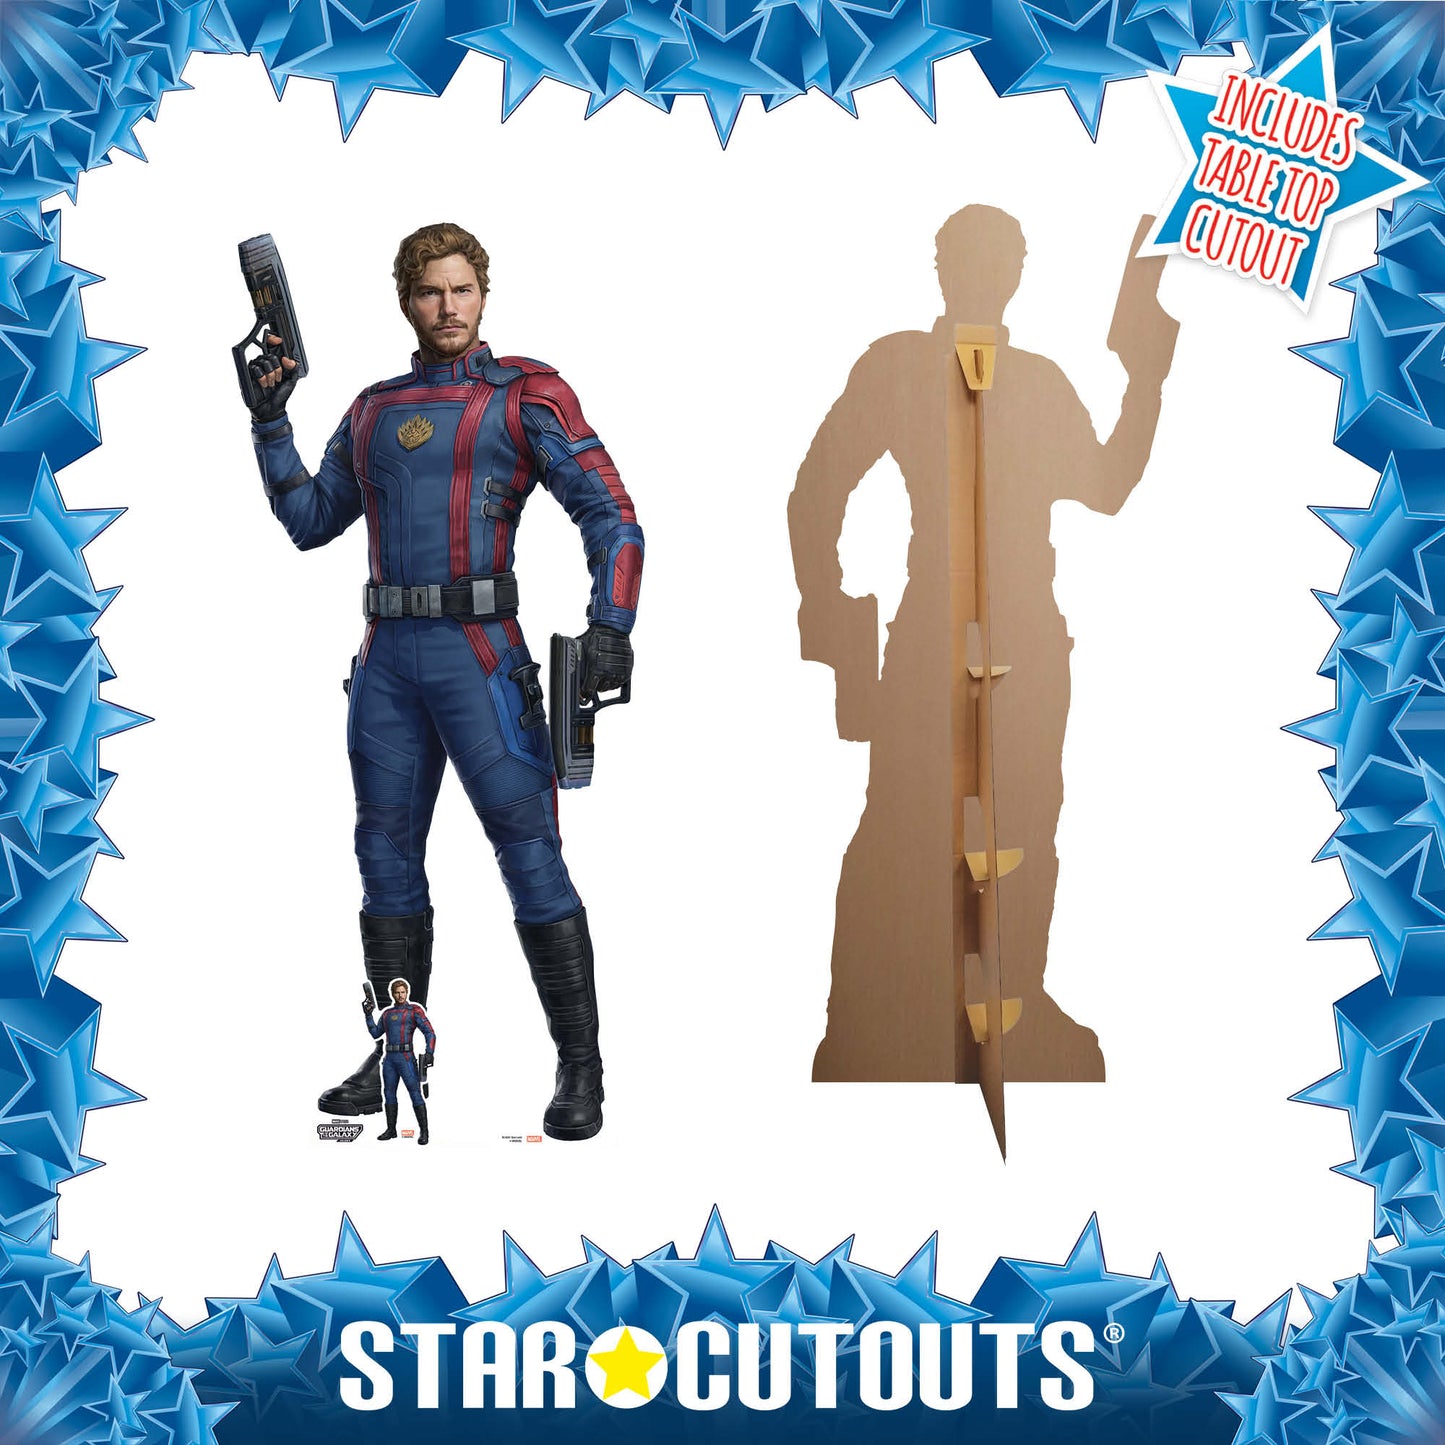 Star Lord Chris Pratt Guardians of the Galaxy Three Marvel Lifesize Cardboard Cut Out With Mini Cardboard Cutout